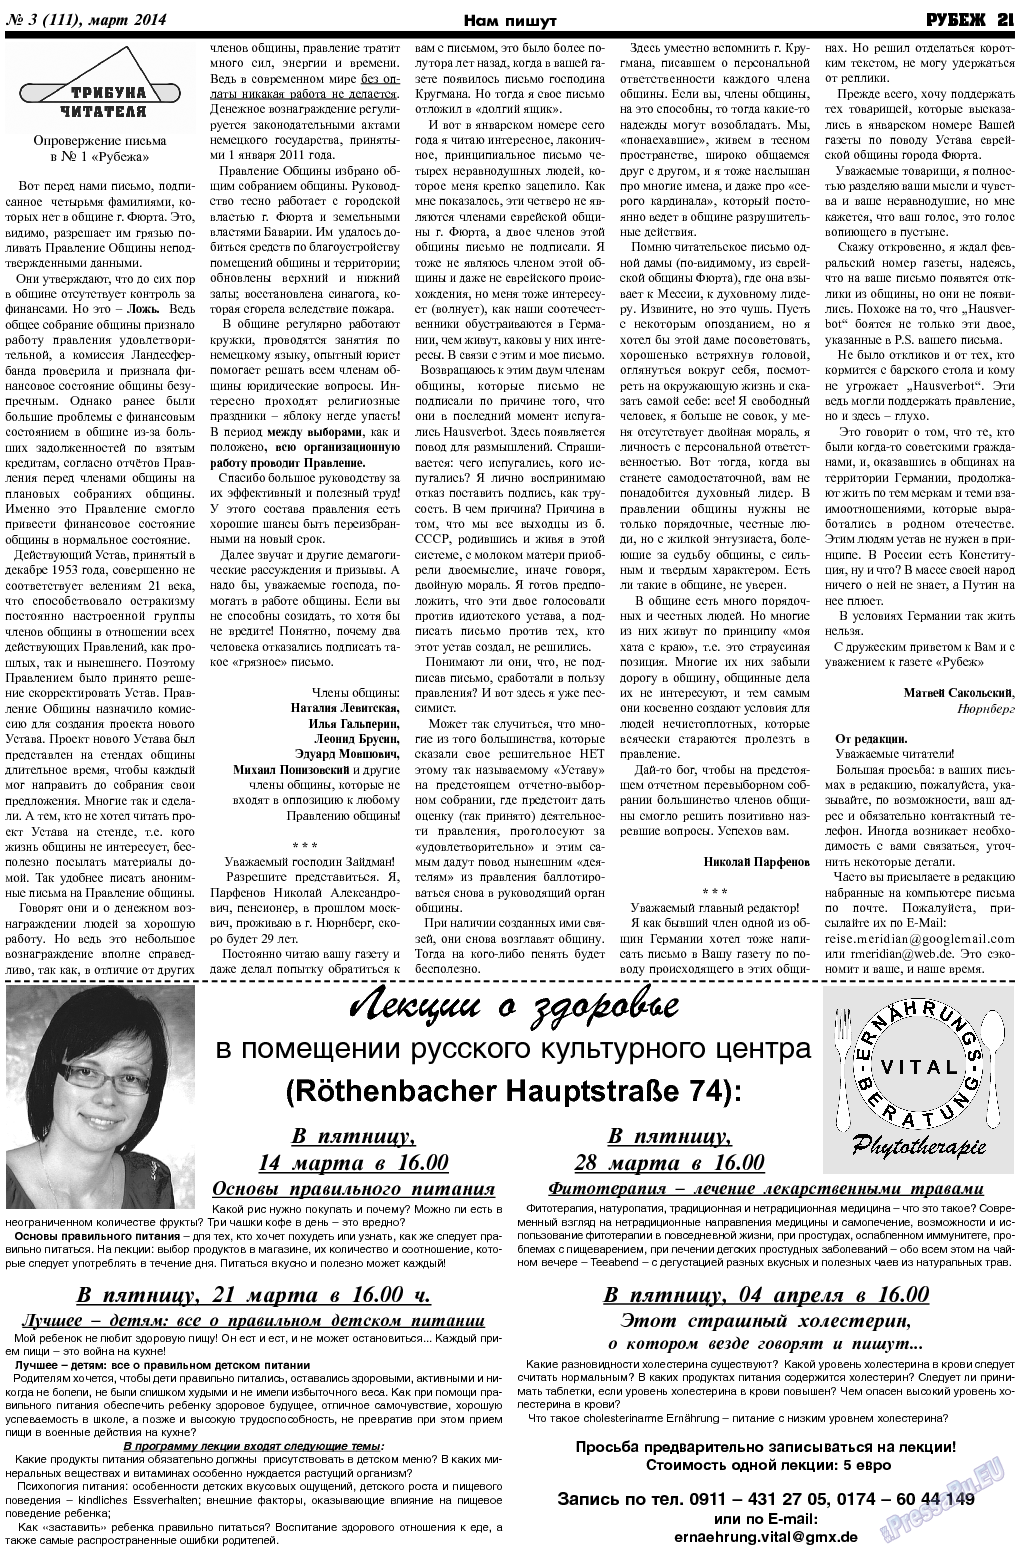 Рубеж, газета. 2014 №3 стр.21